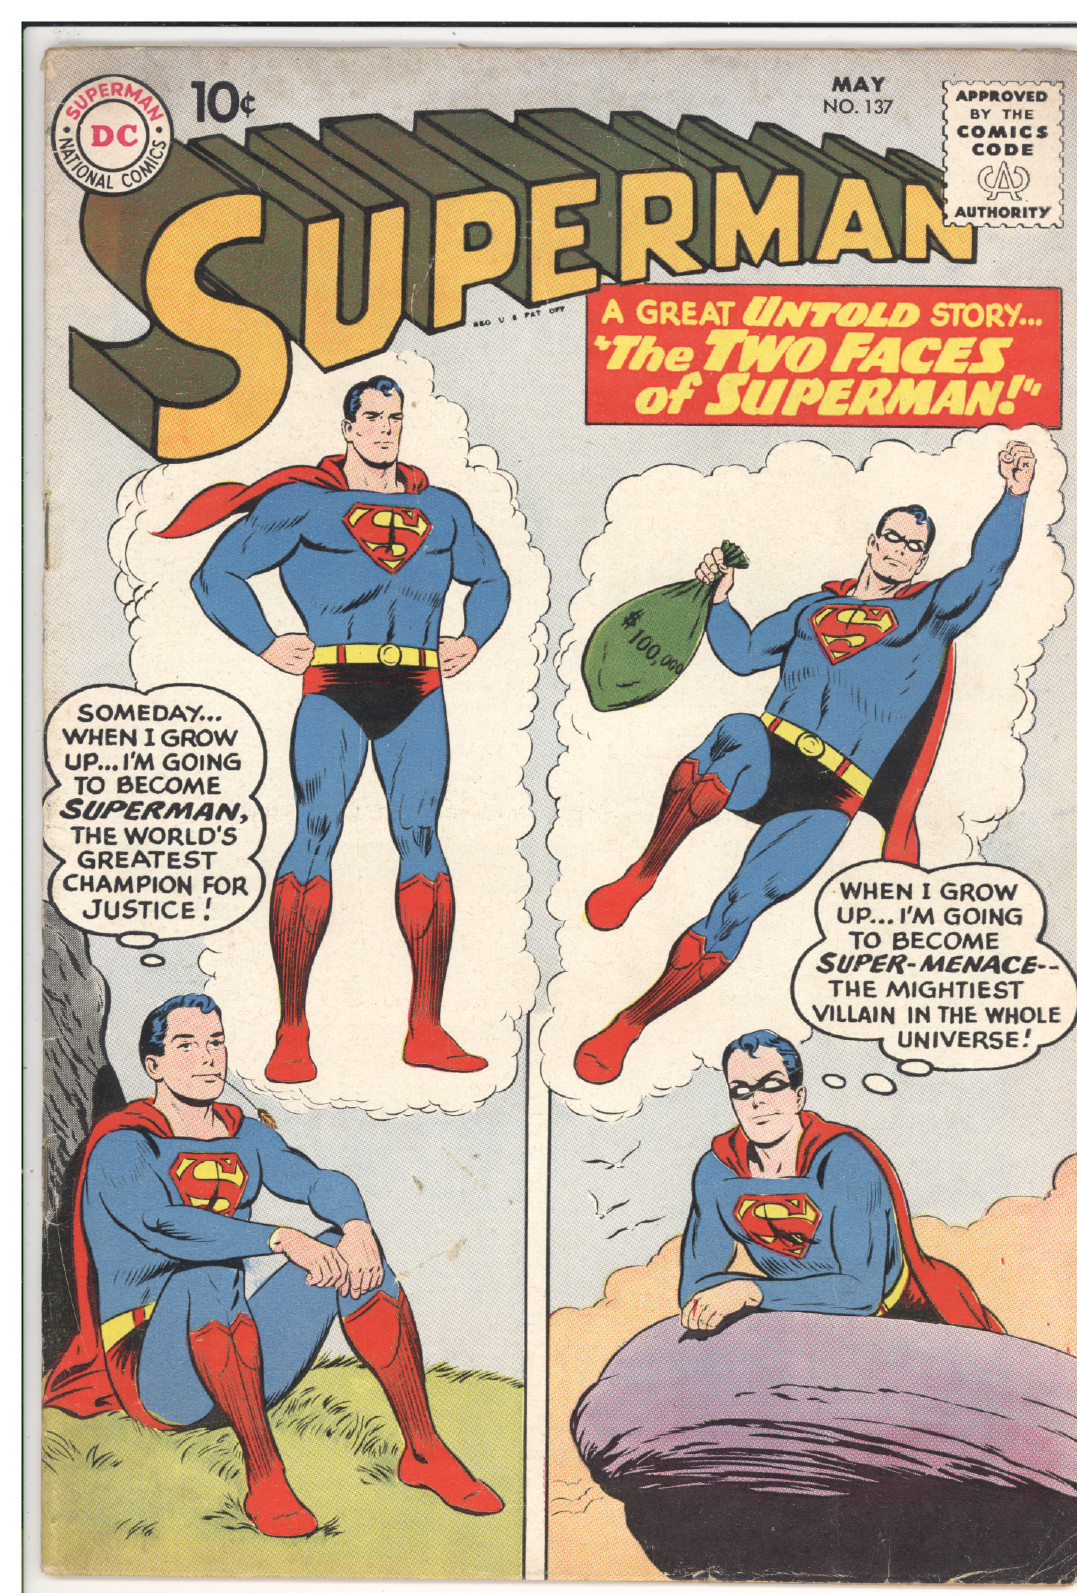 Superman #137 front